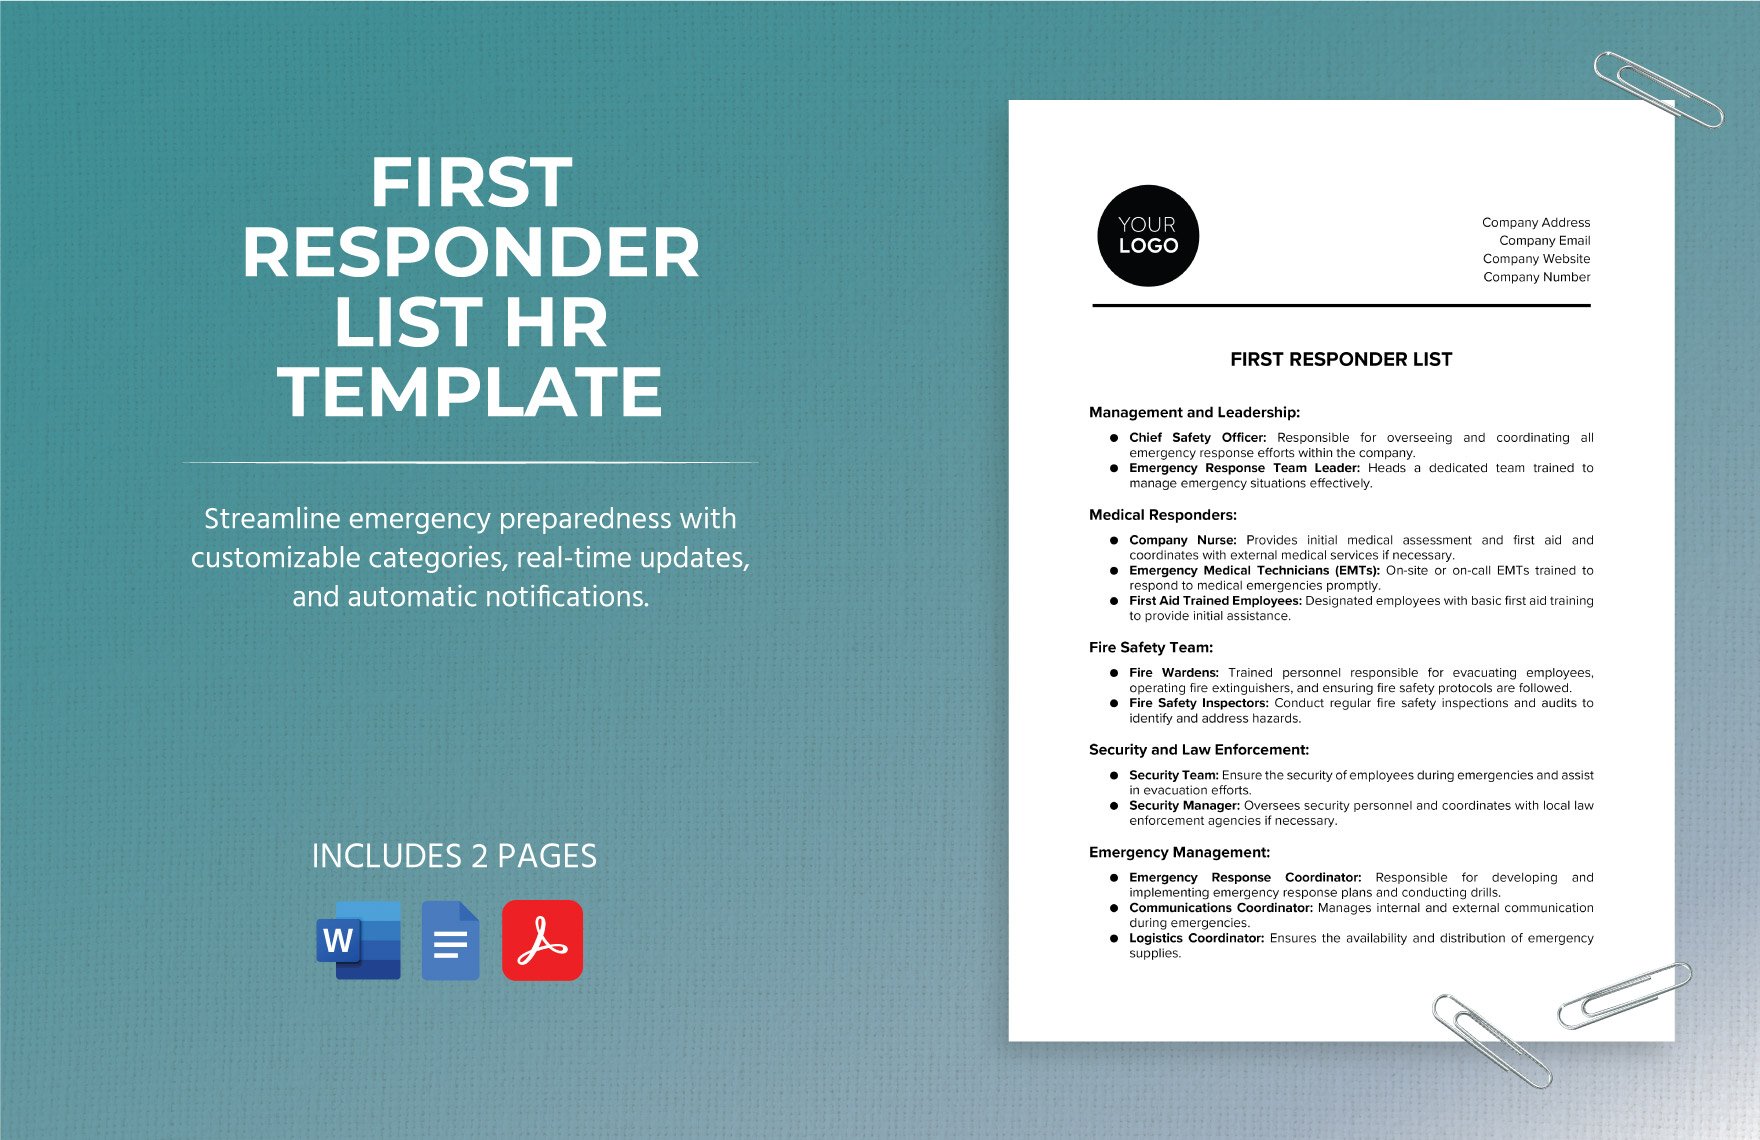 First Responder List HR Template in Word, Google Docs, PDF